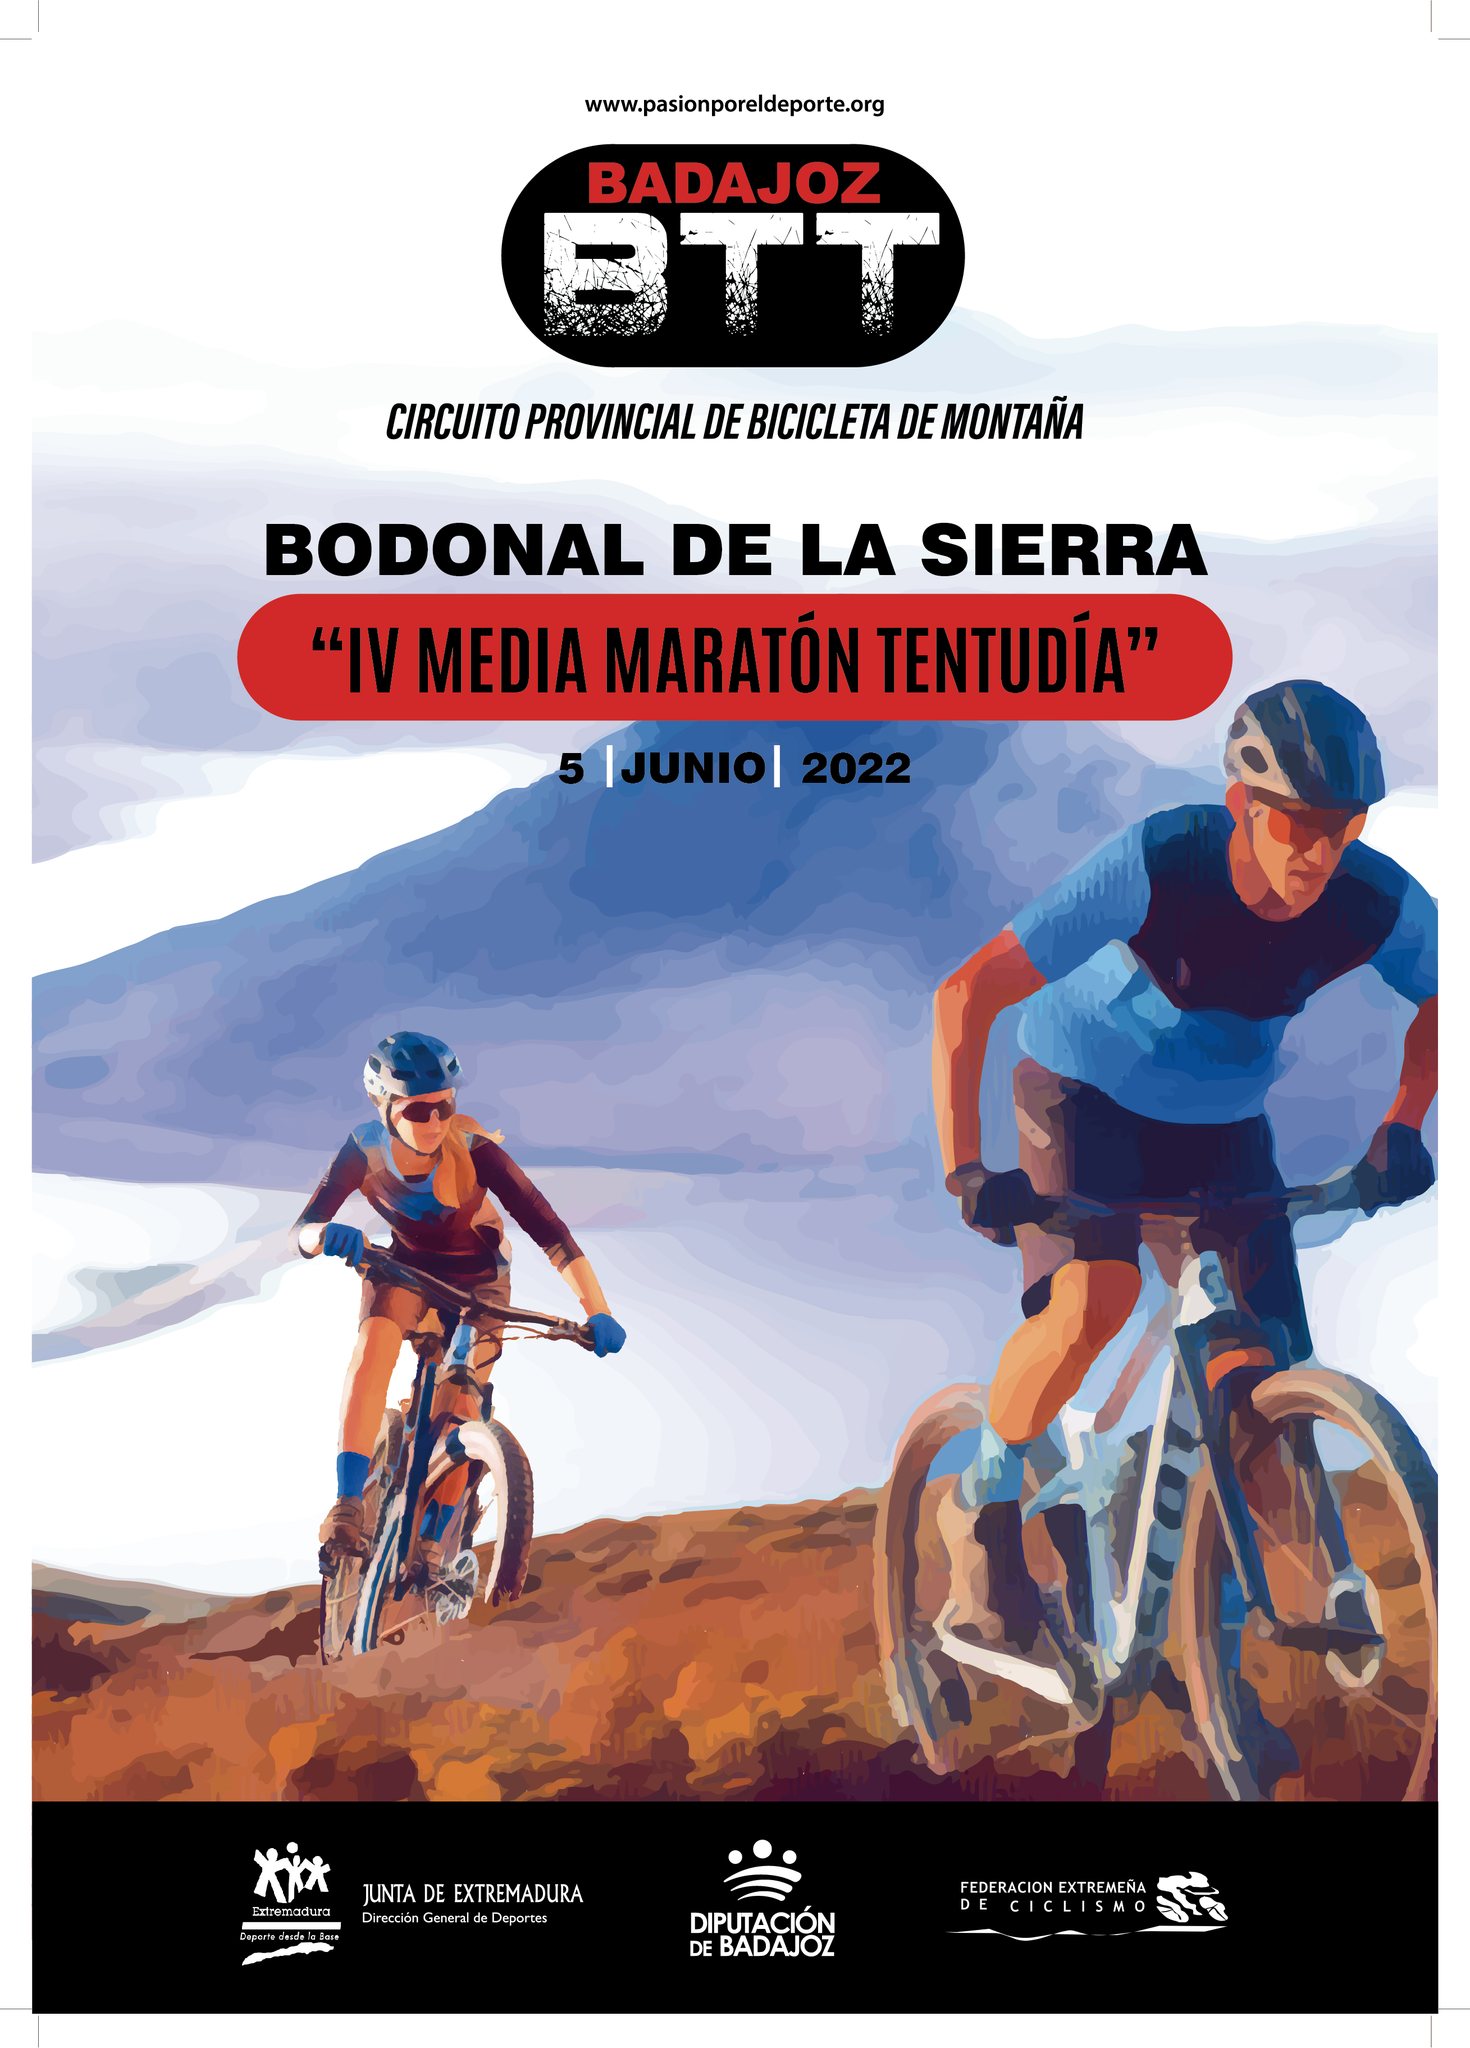 BTT BADAJOZ | Bodonal de la Sierra (IV Media Maratón Tentudía)